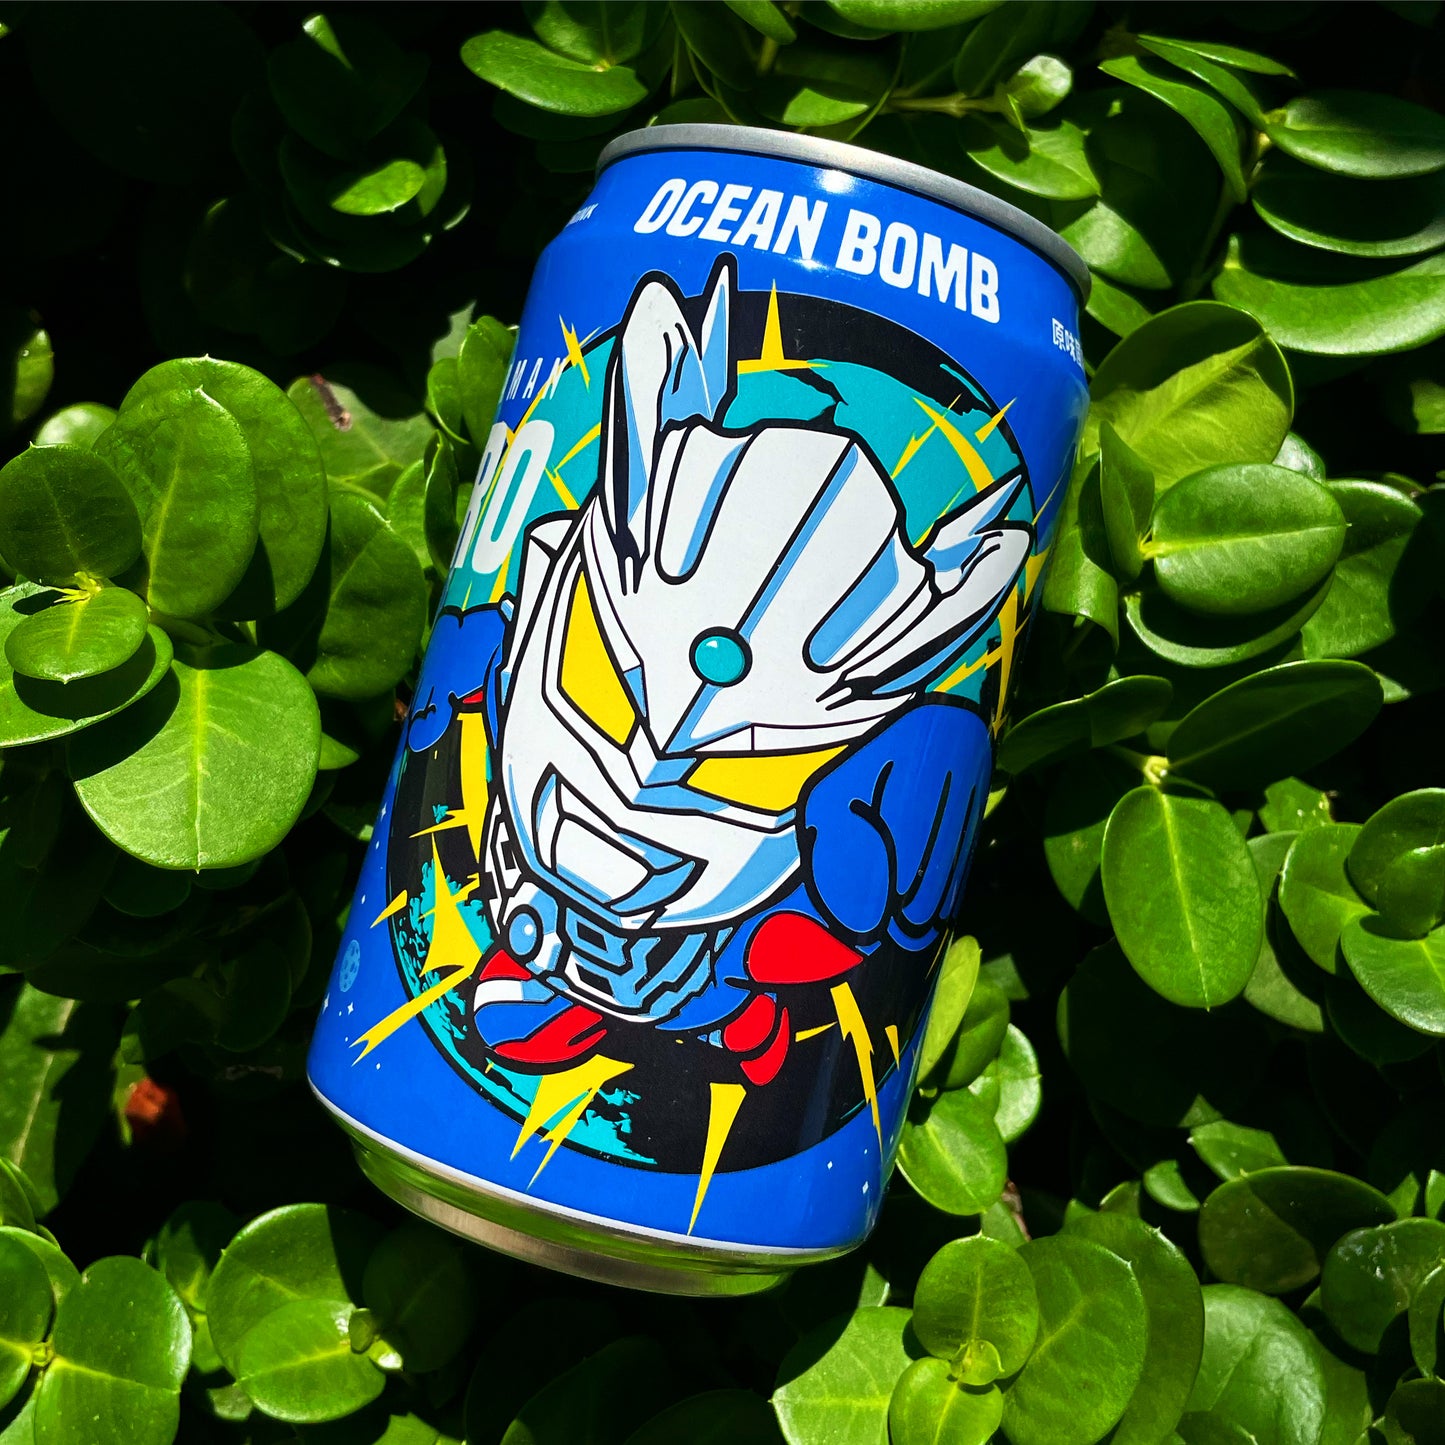 Ocean Bomb Ultra Man Zero - Yogurt flavor (Taiwan)